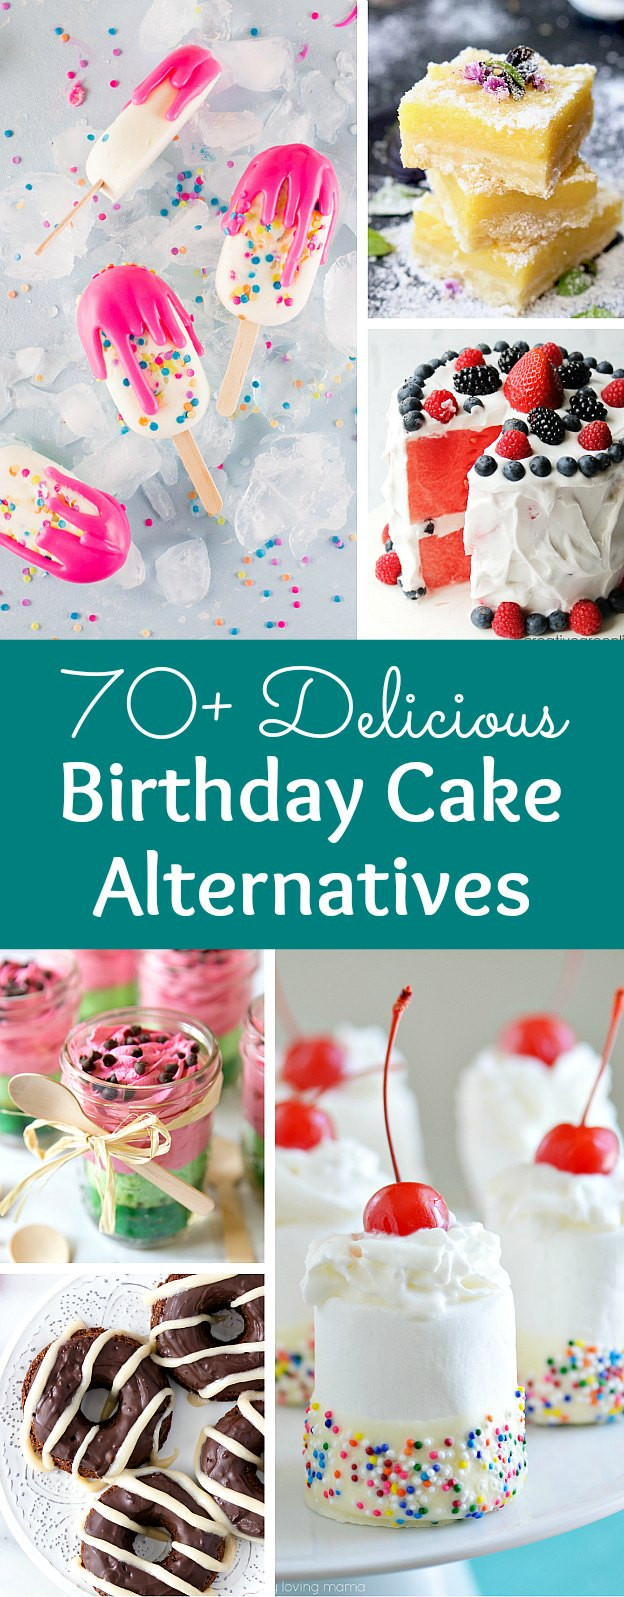 Best ideas about Birthday Cake Alternatives
. Save or Pin 70 Creative Birthday Cake Alternatives Now.